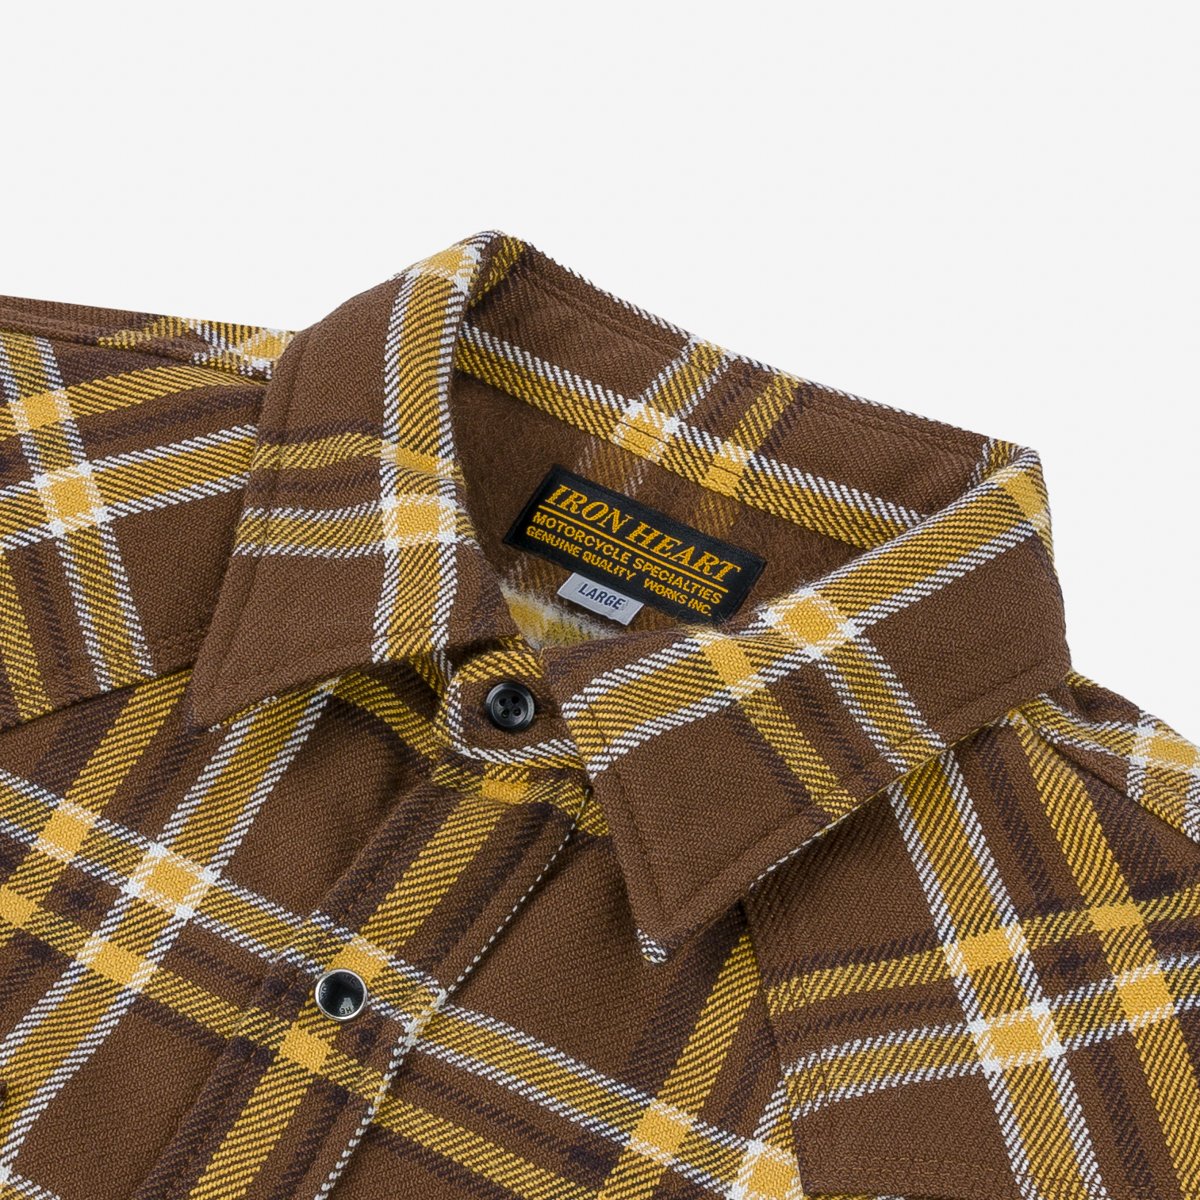 Iron Heart IHSH-372-BRN Ultra Heavy Flannel Brown Crazy Check Western Shirt - Brown